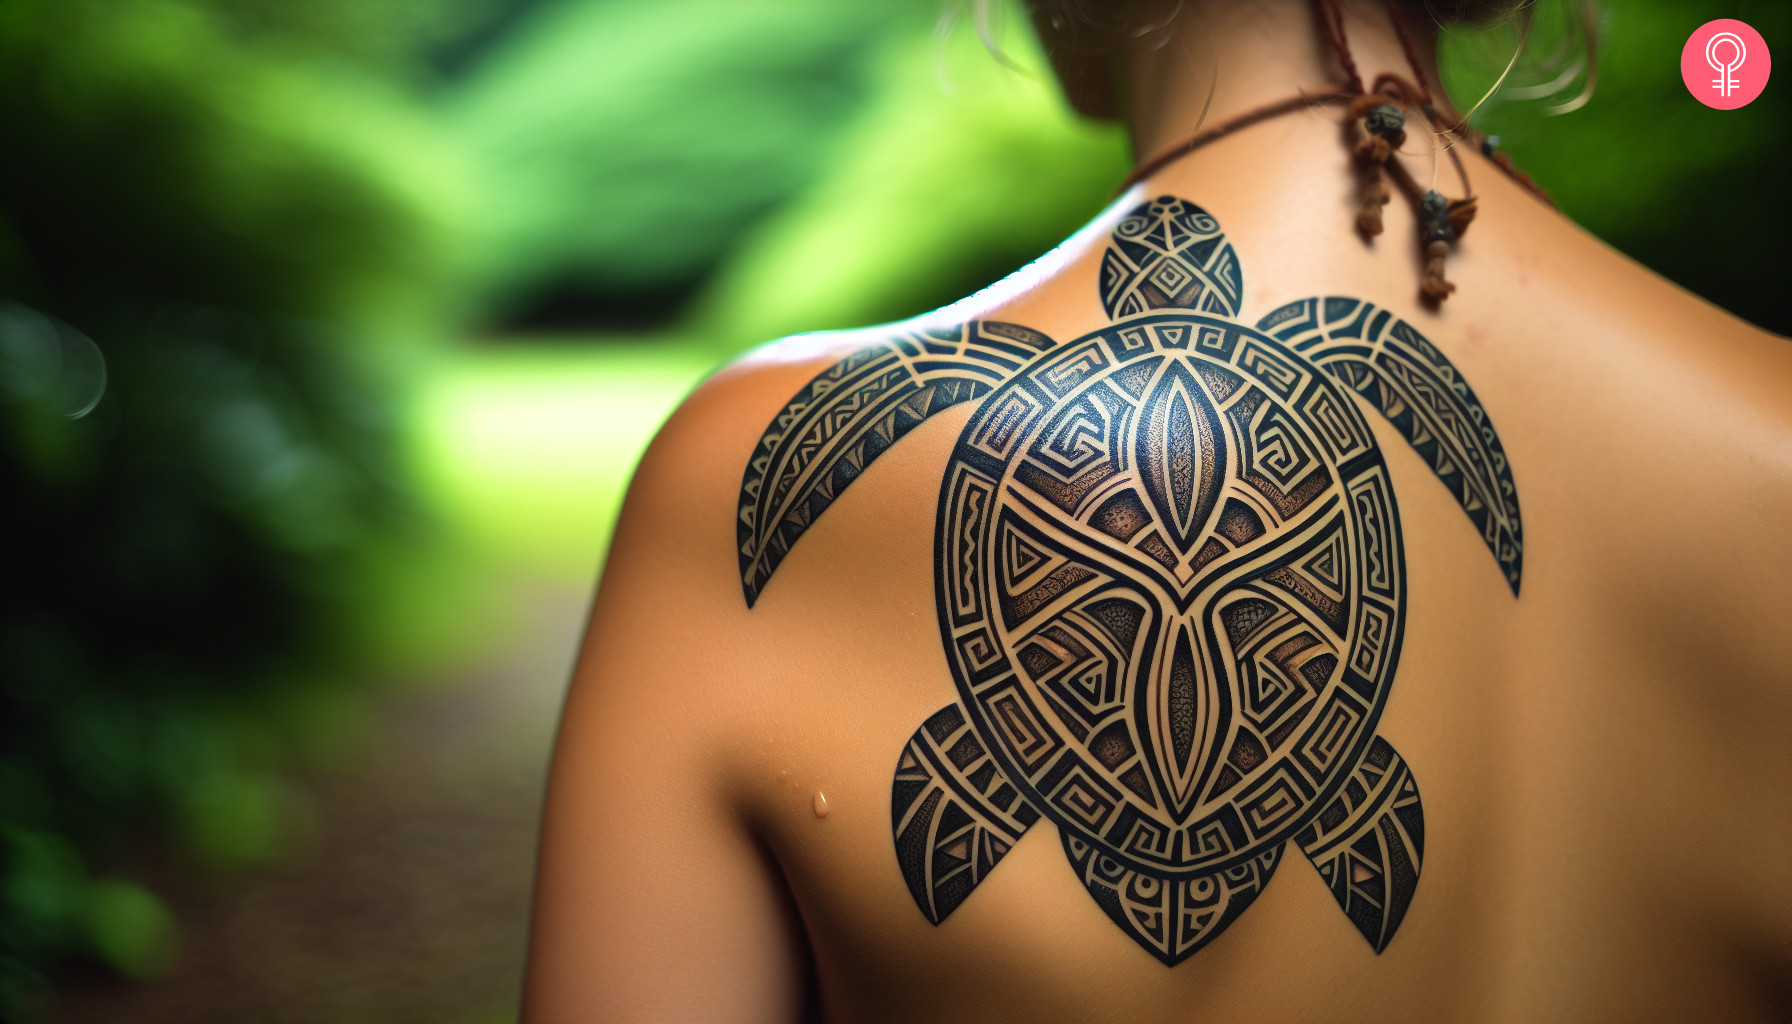 Maori geometric turtle tattoo on the upper back of a woman